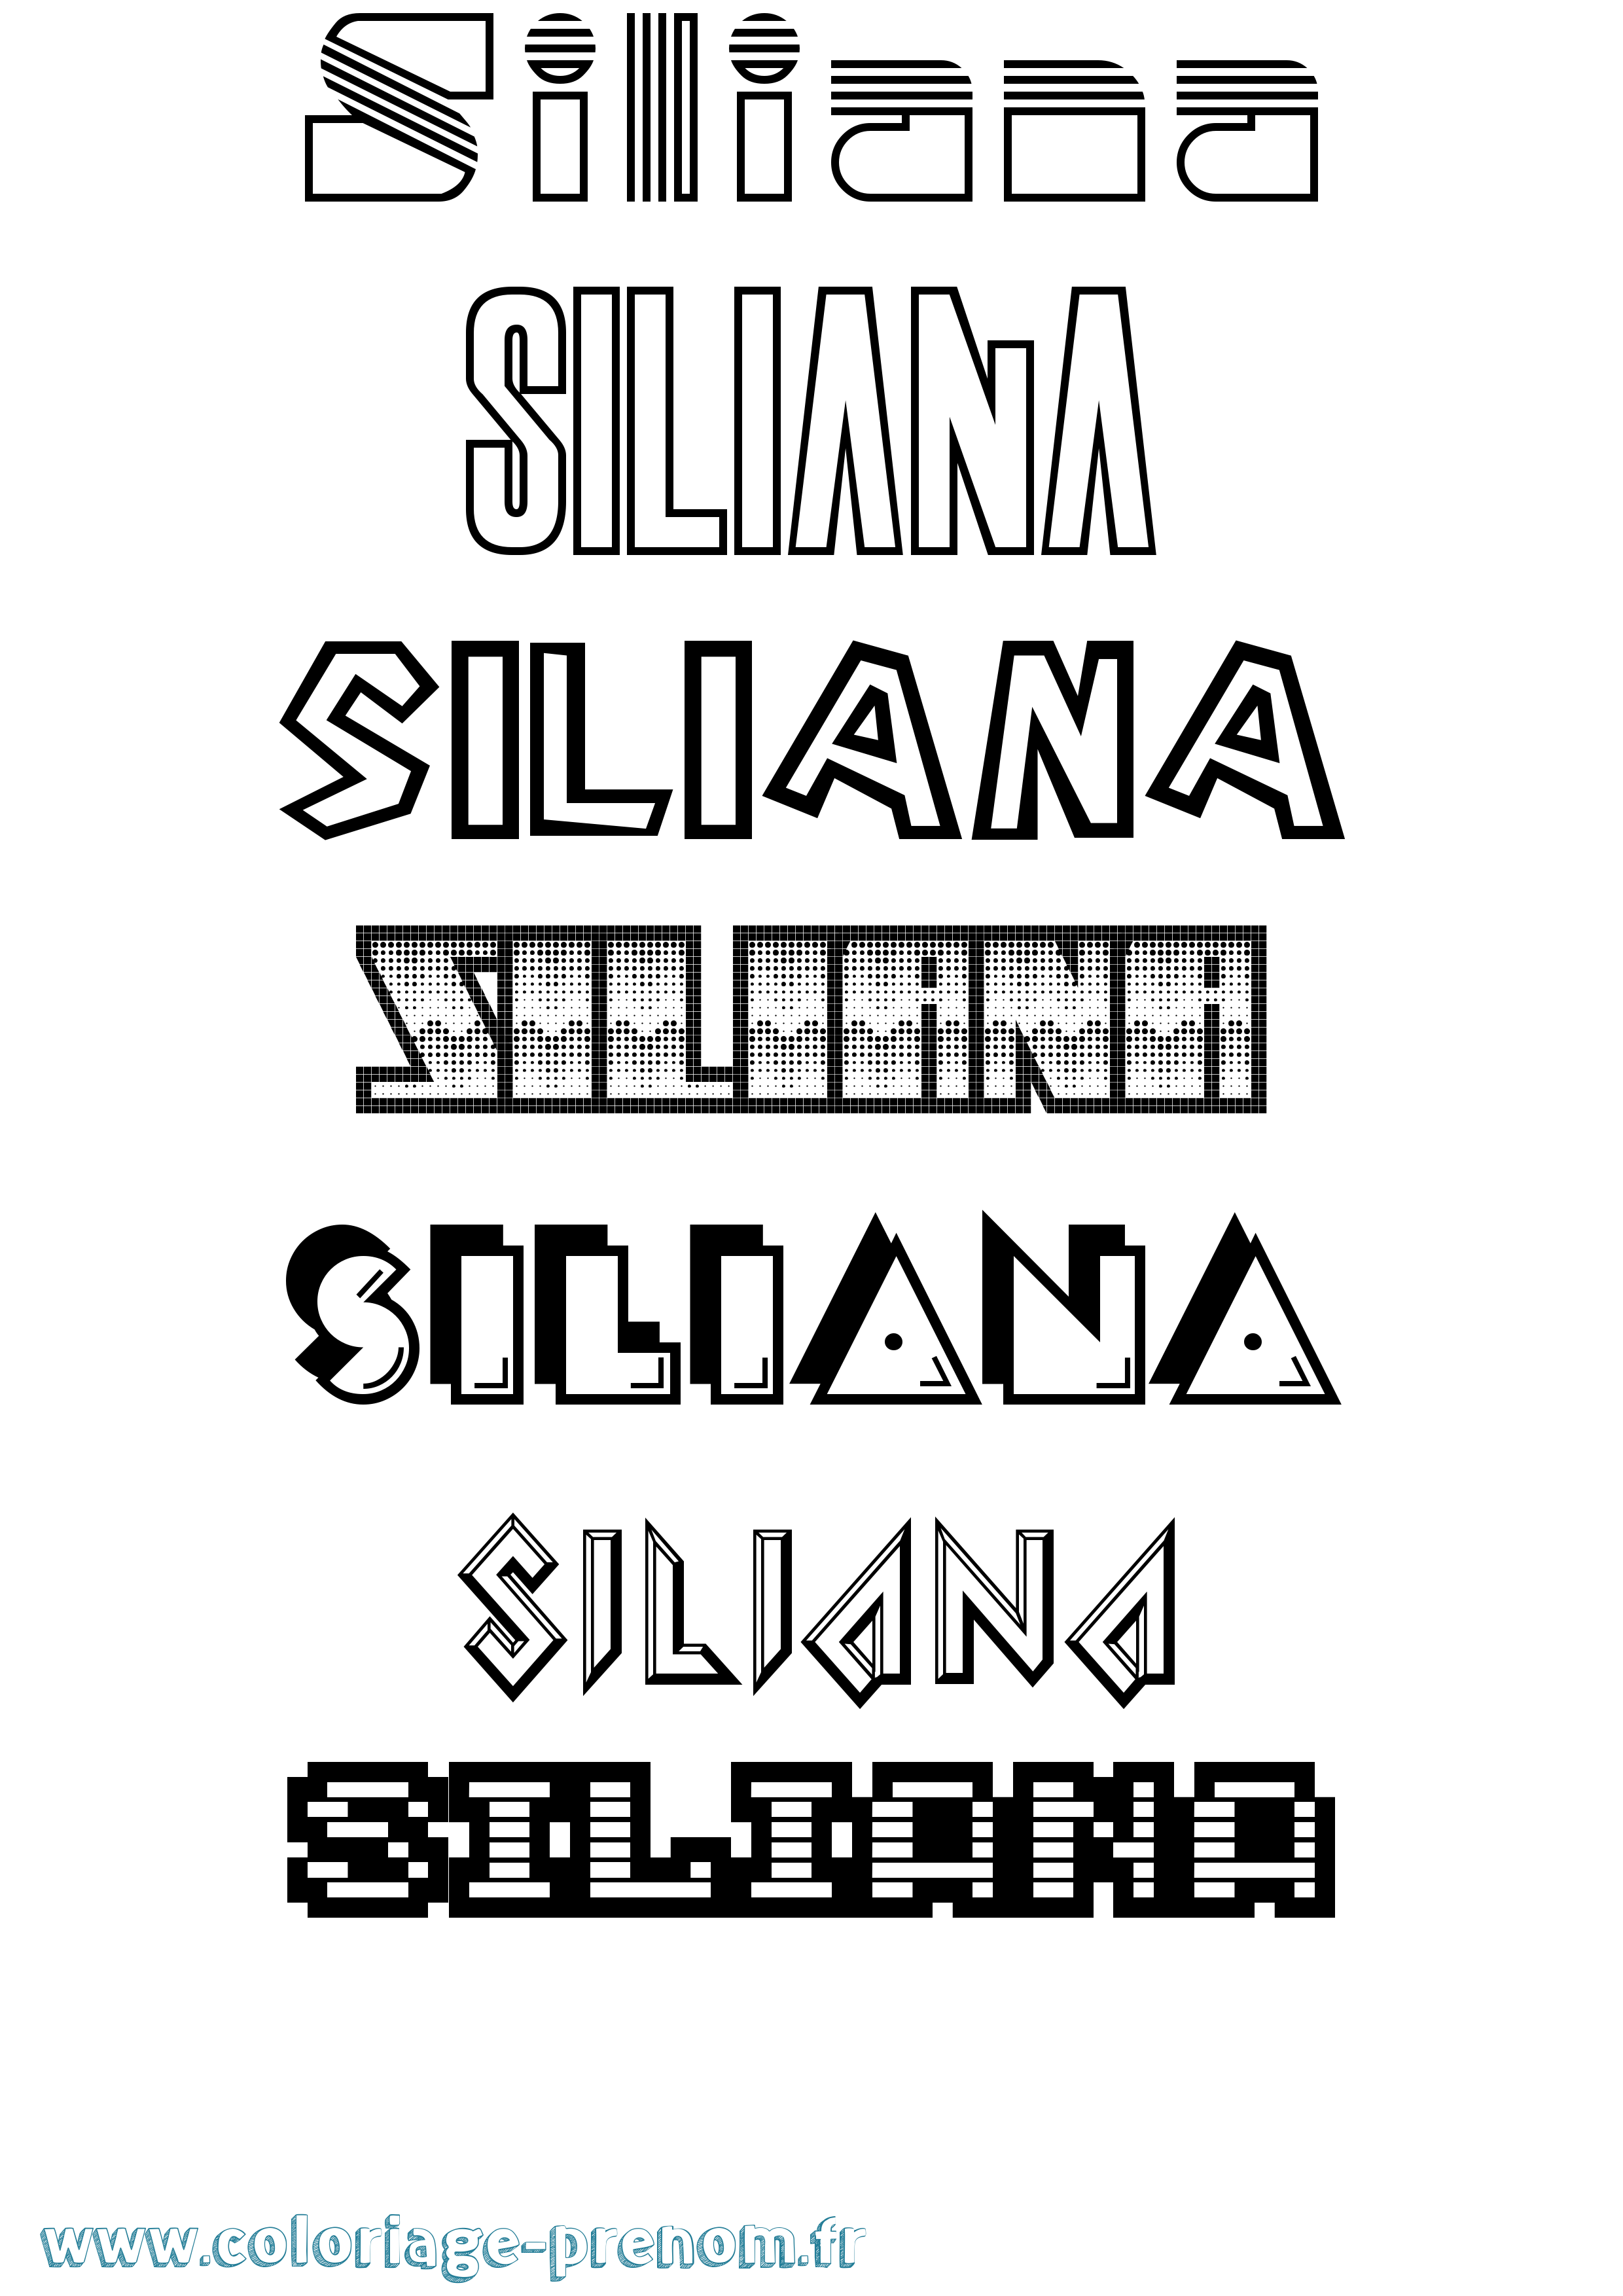 Coloriage prénom Siliana Jeux Vidéos